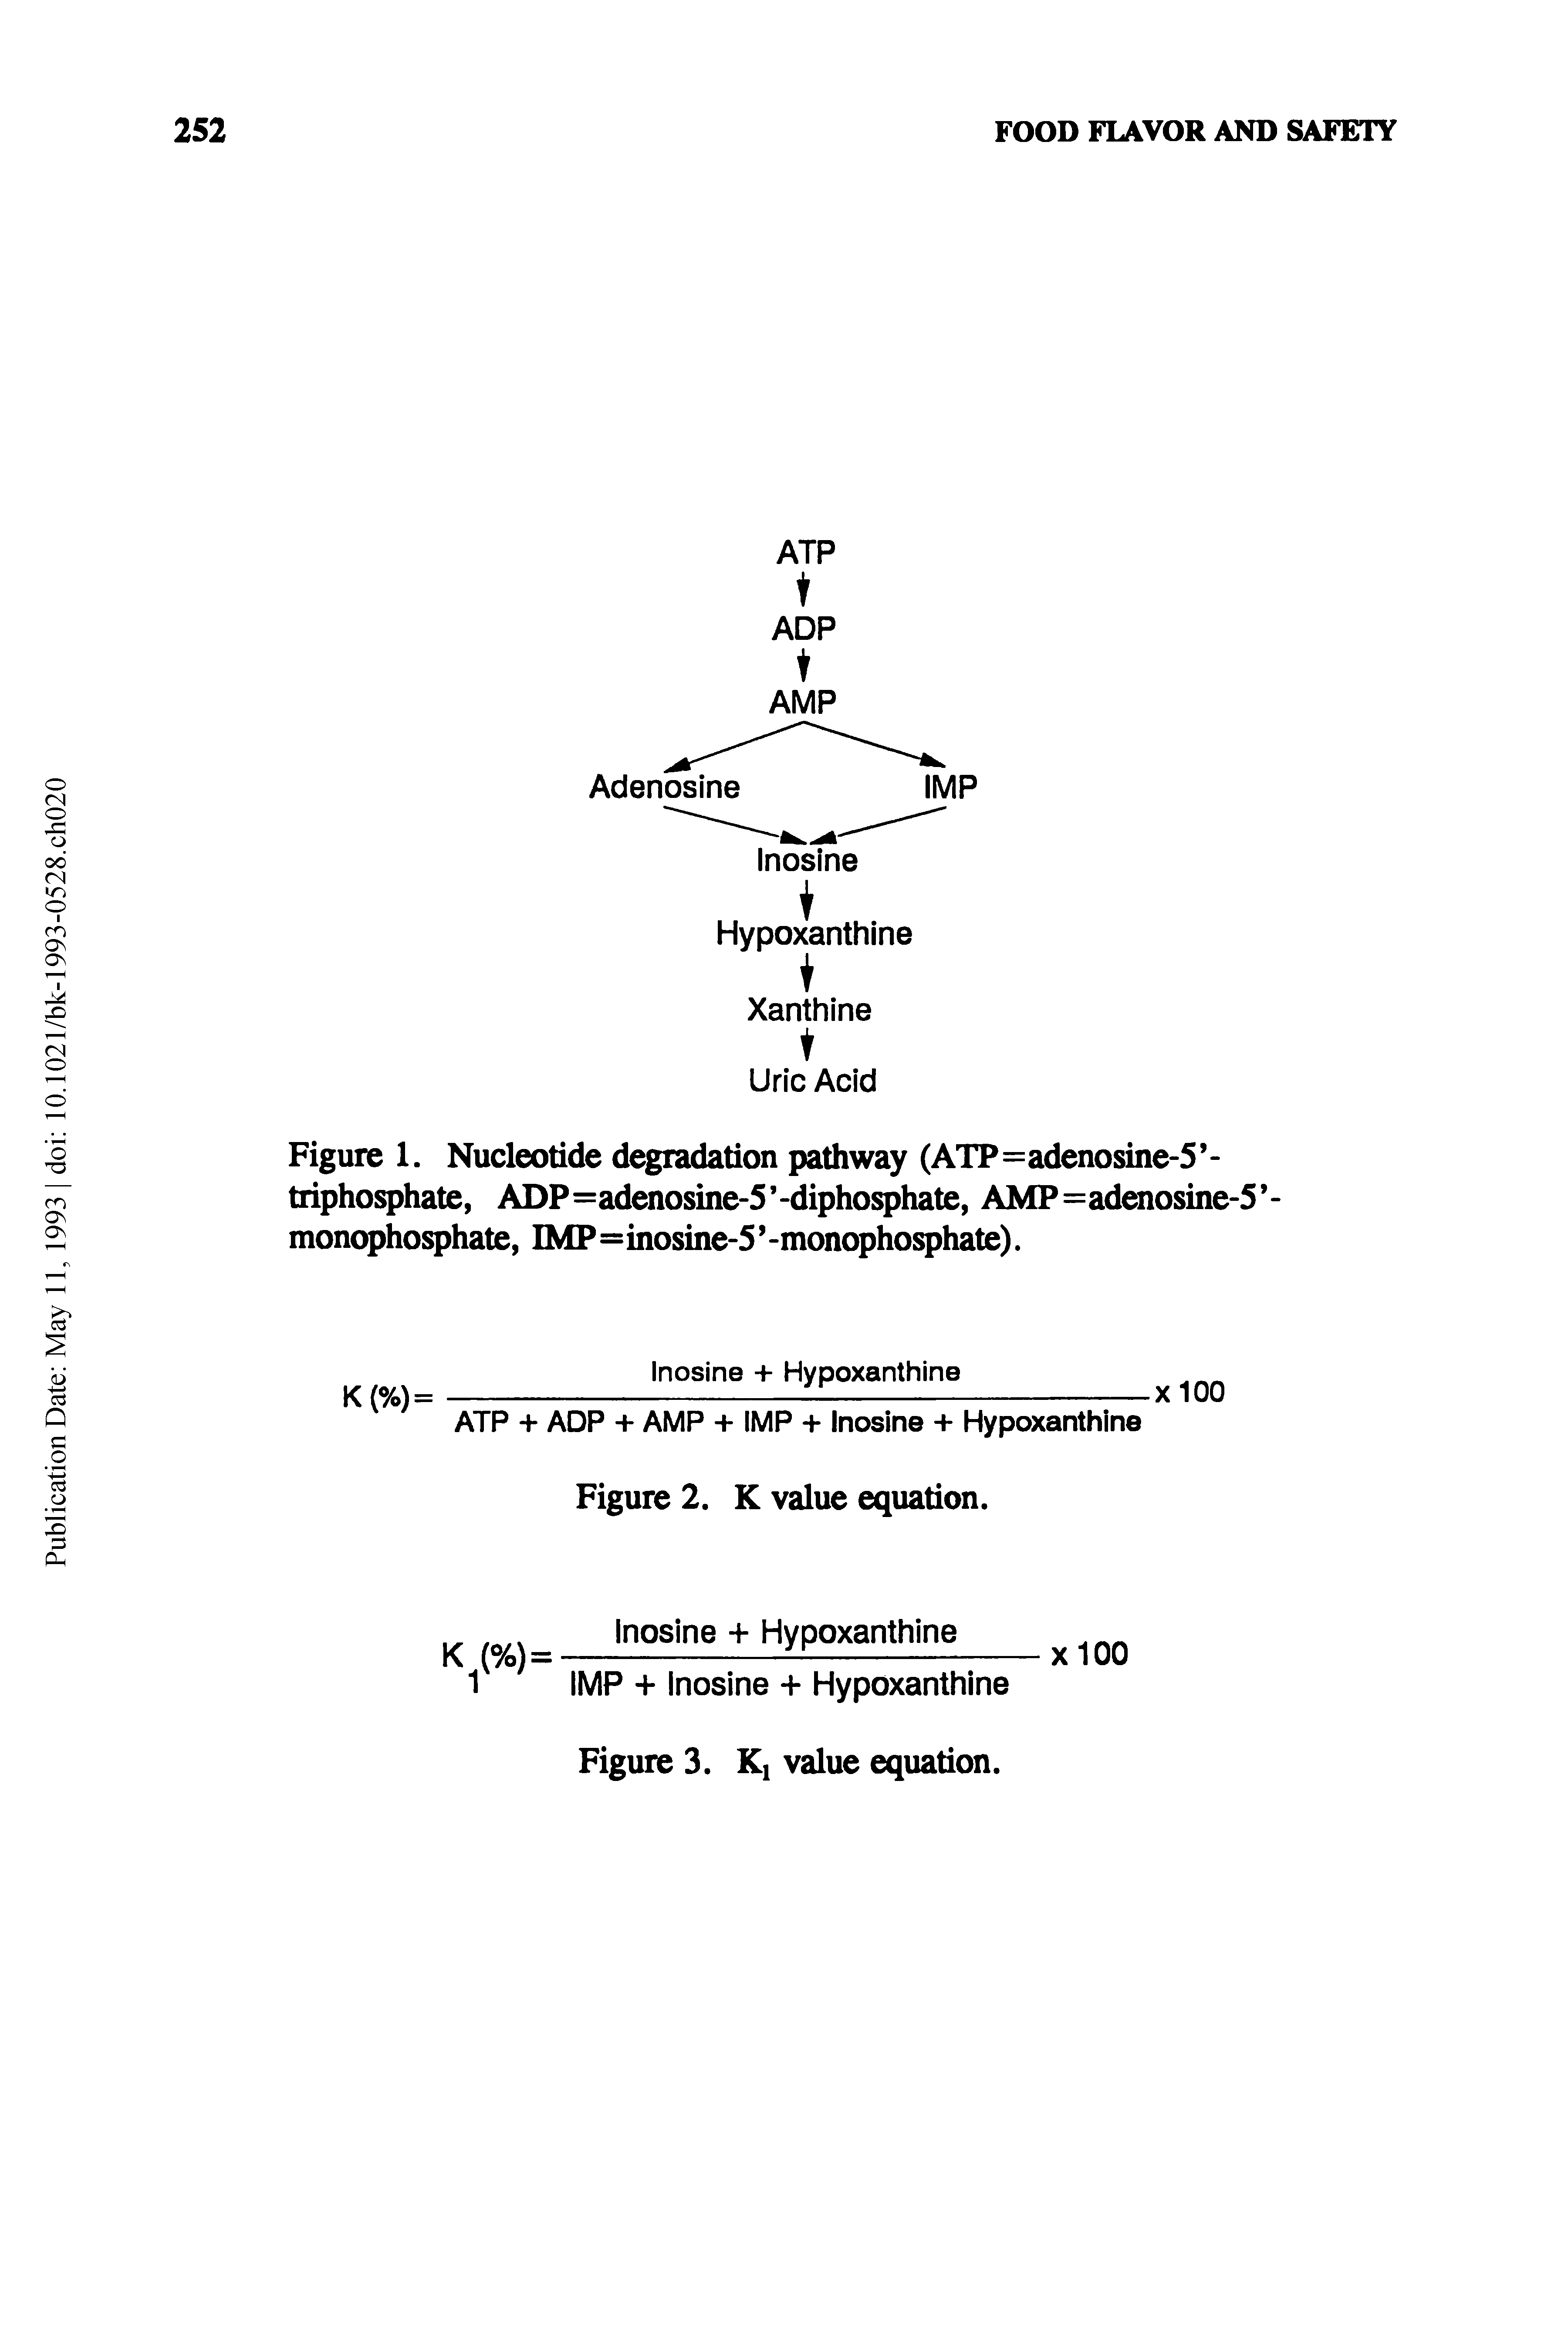 Figure 1. Nucleotide degradation pathway (ATP=adenosine-5 -triphosphate, ADP=adenosine-5 -diphosphate, AMP=adenosine-5 -monophosphate, IMP=inosine-5 -monophosphate).